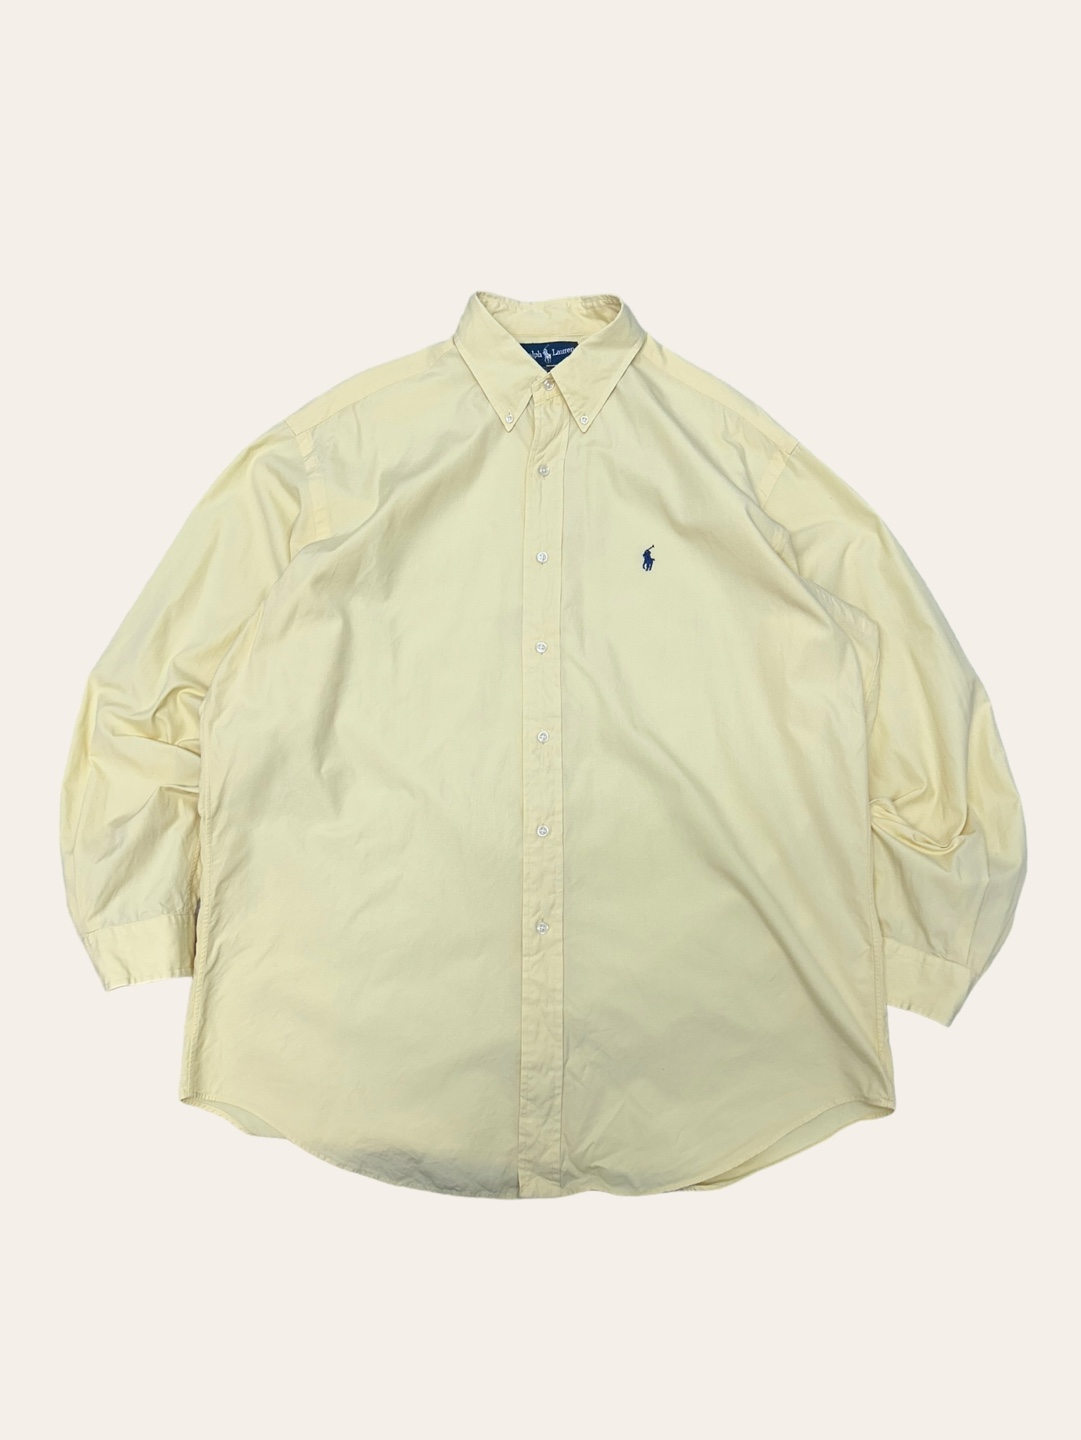 (From USA)Polo ralph lauren yellow oxford shirt L